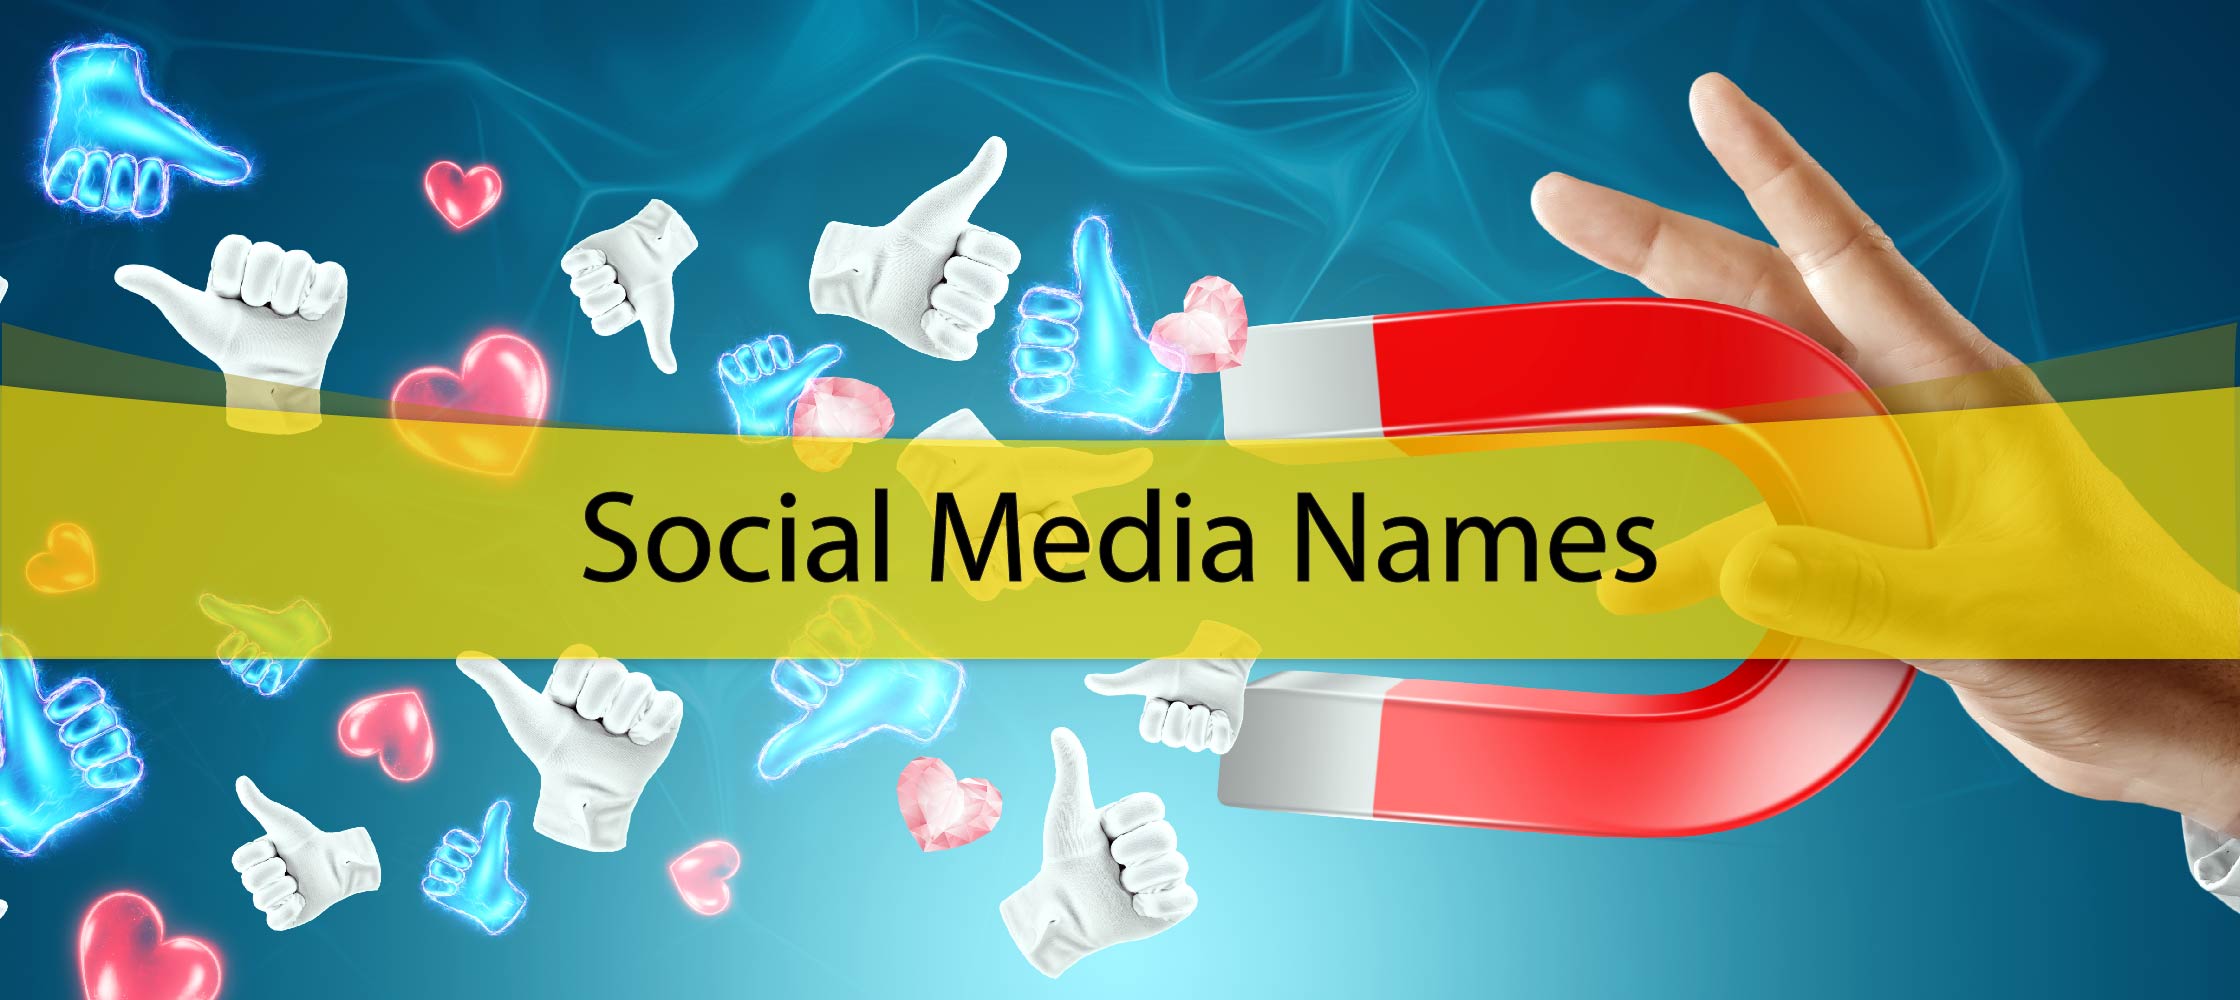 Social Media Names